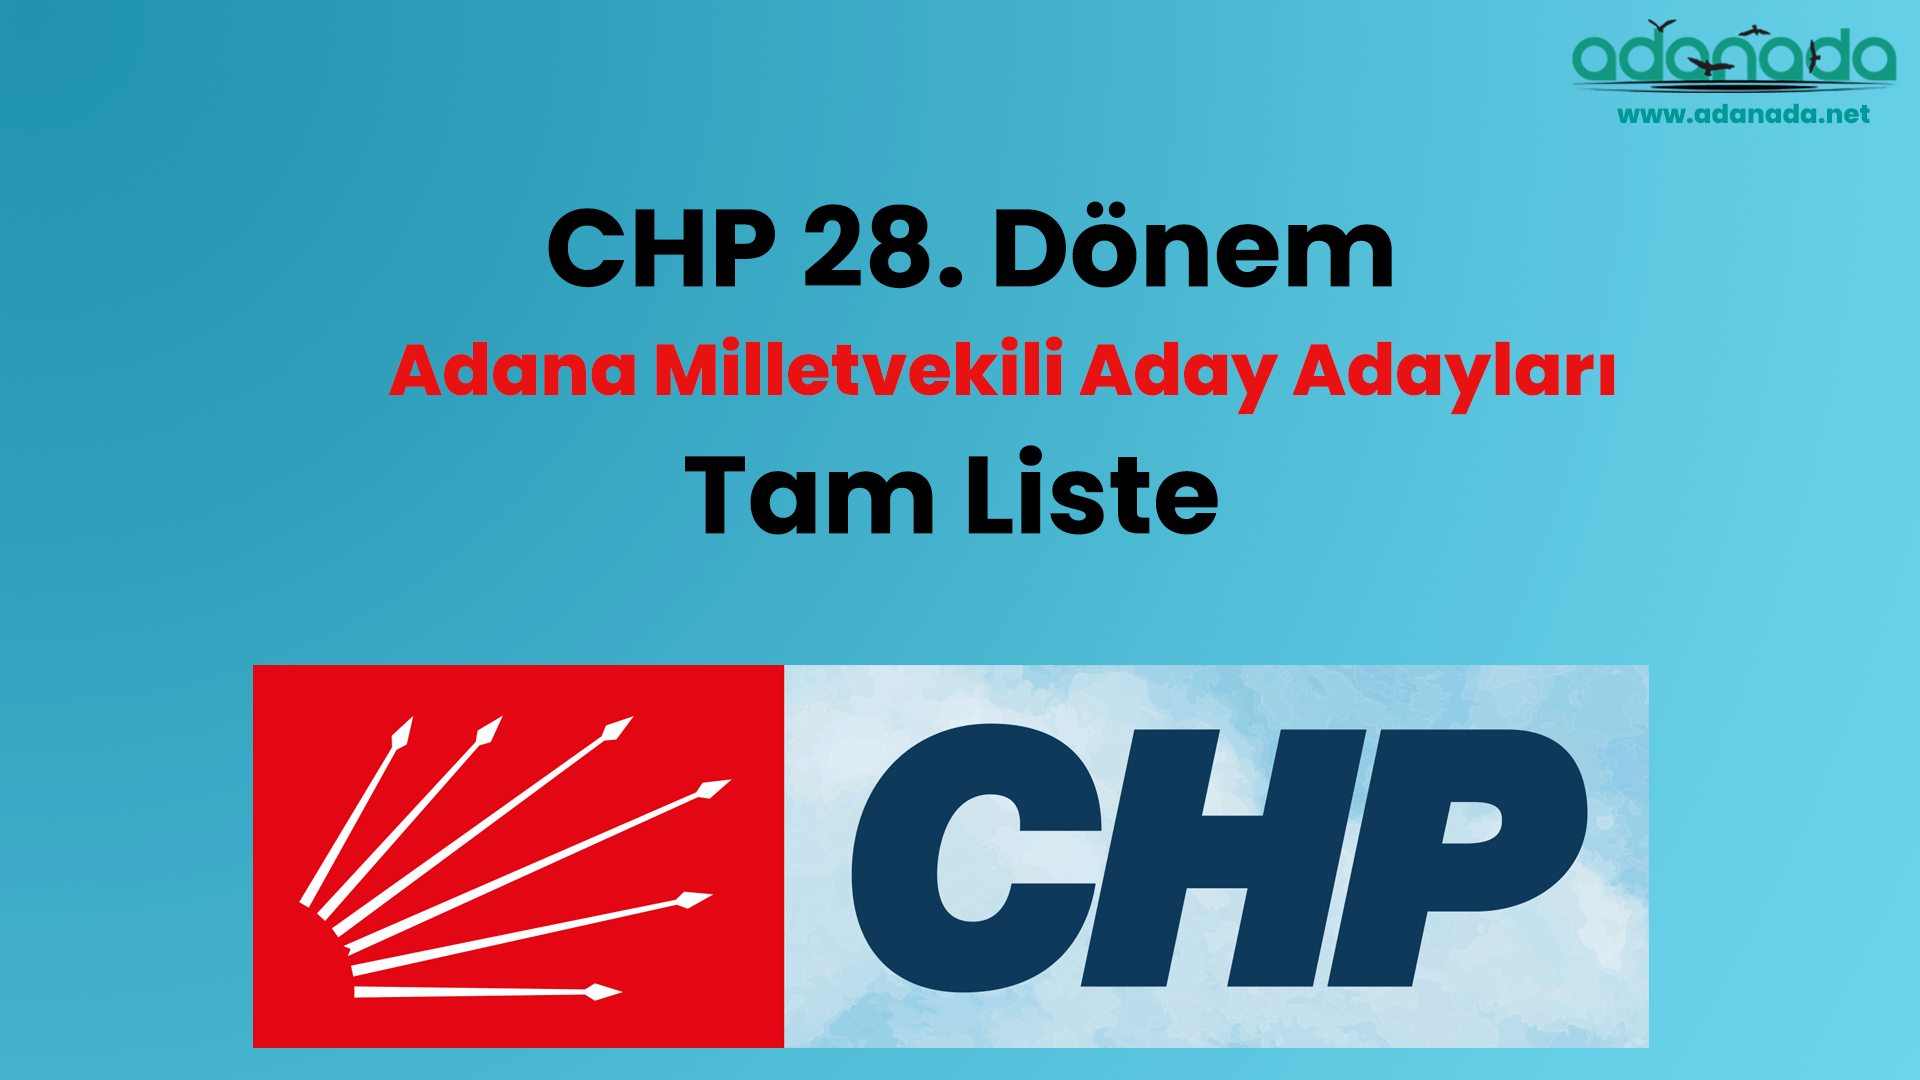 CHP Adana milletvekili aday adayları tam listesi